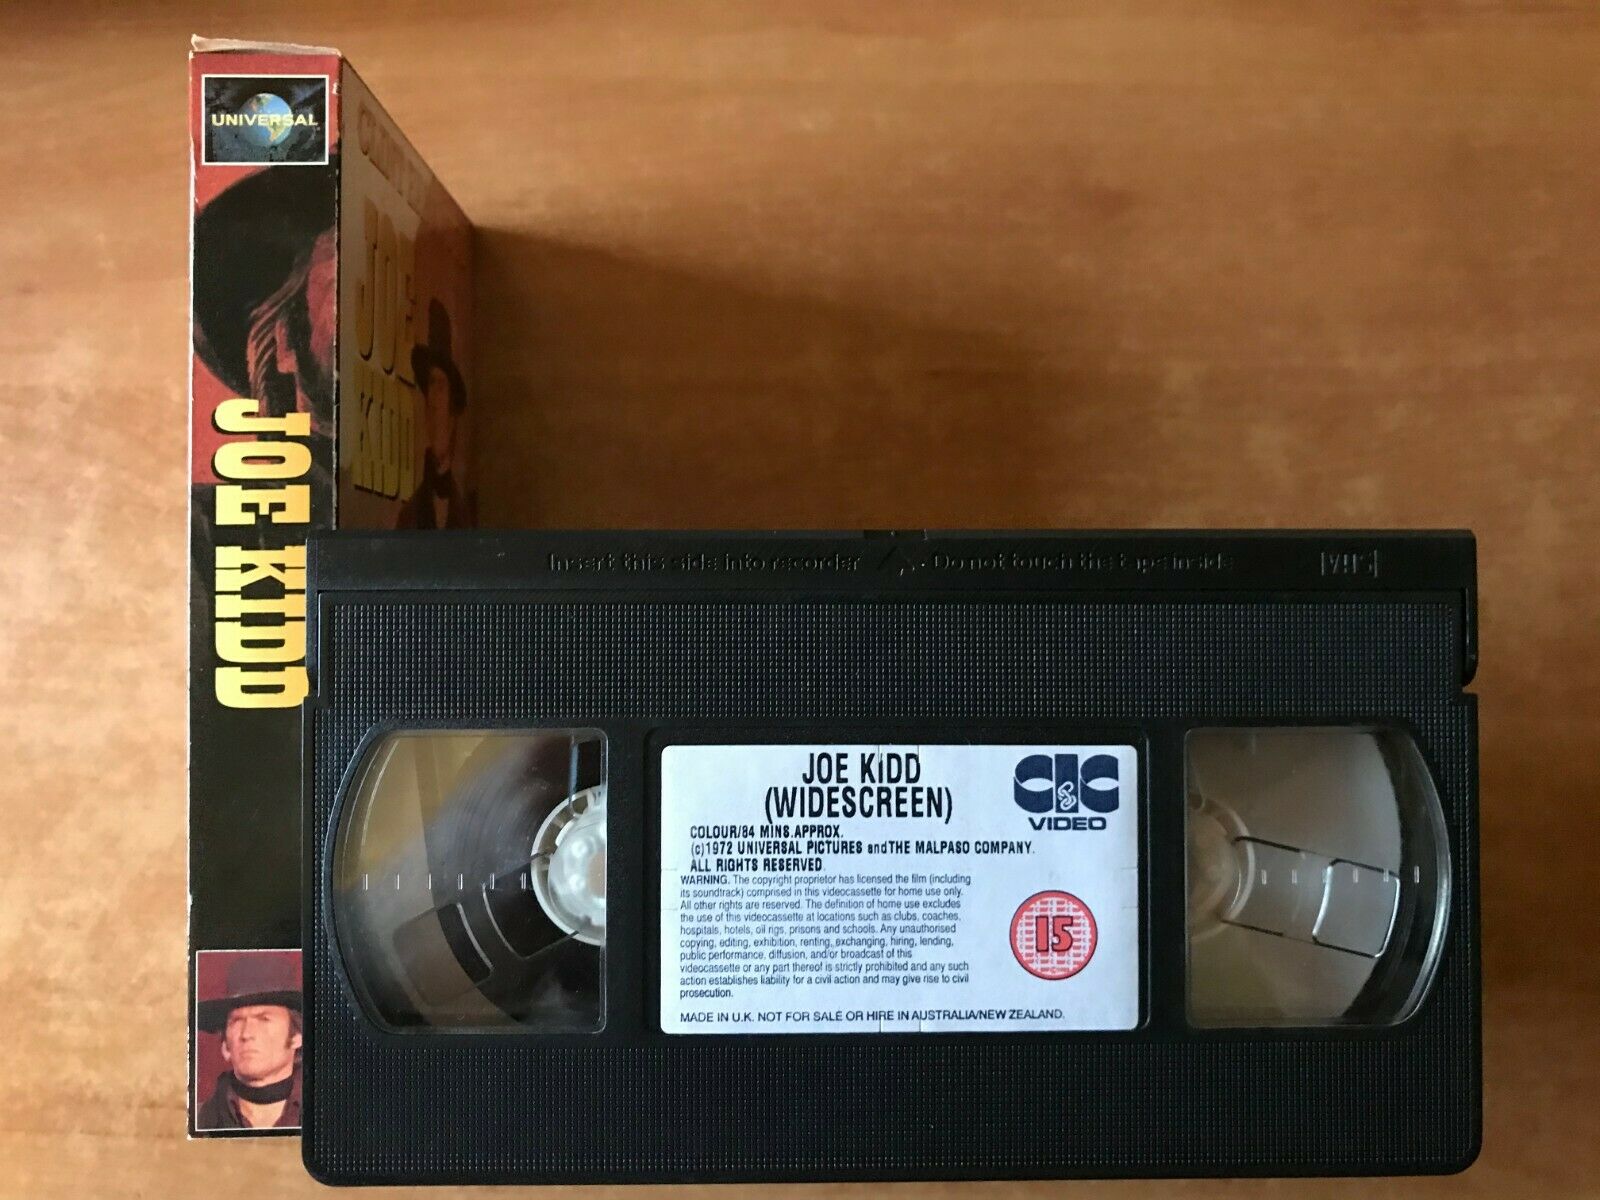 Joe Kidd (1972): Western [Carton Box] Clint Eastwood / Robert Duvall - Pal VHS-